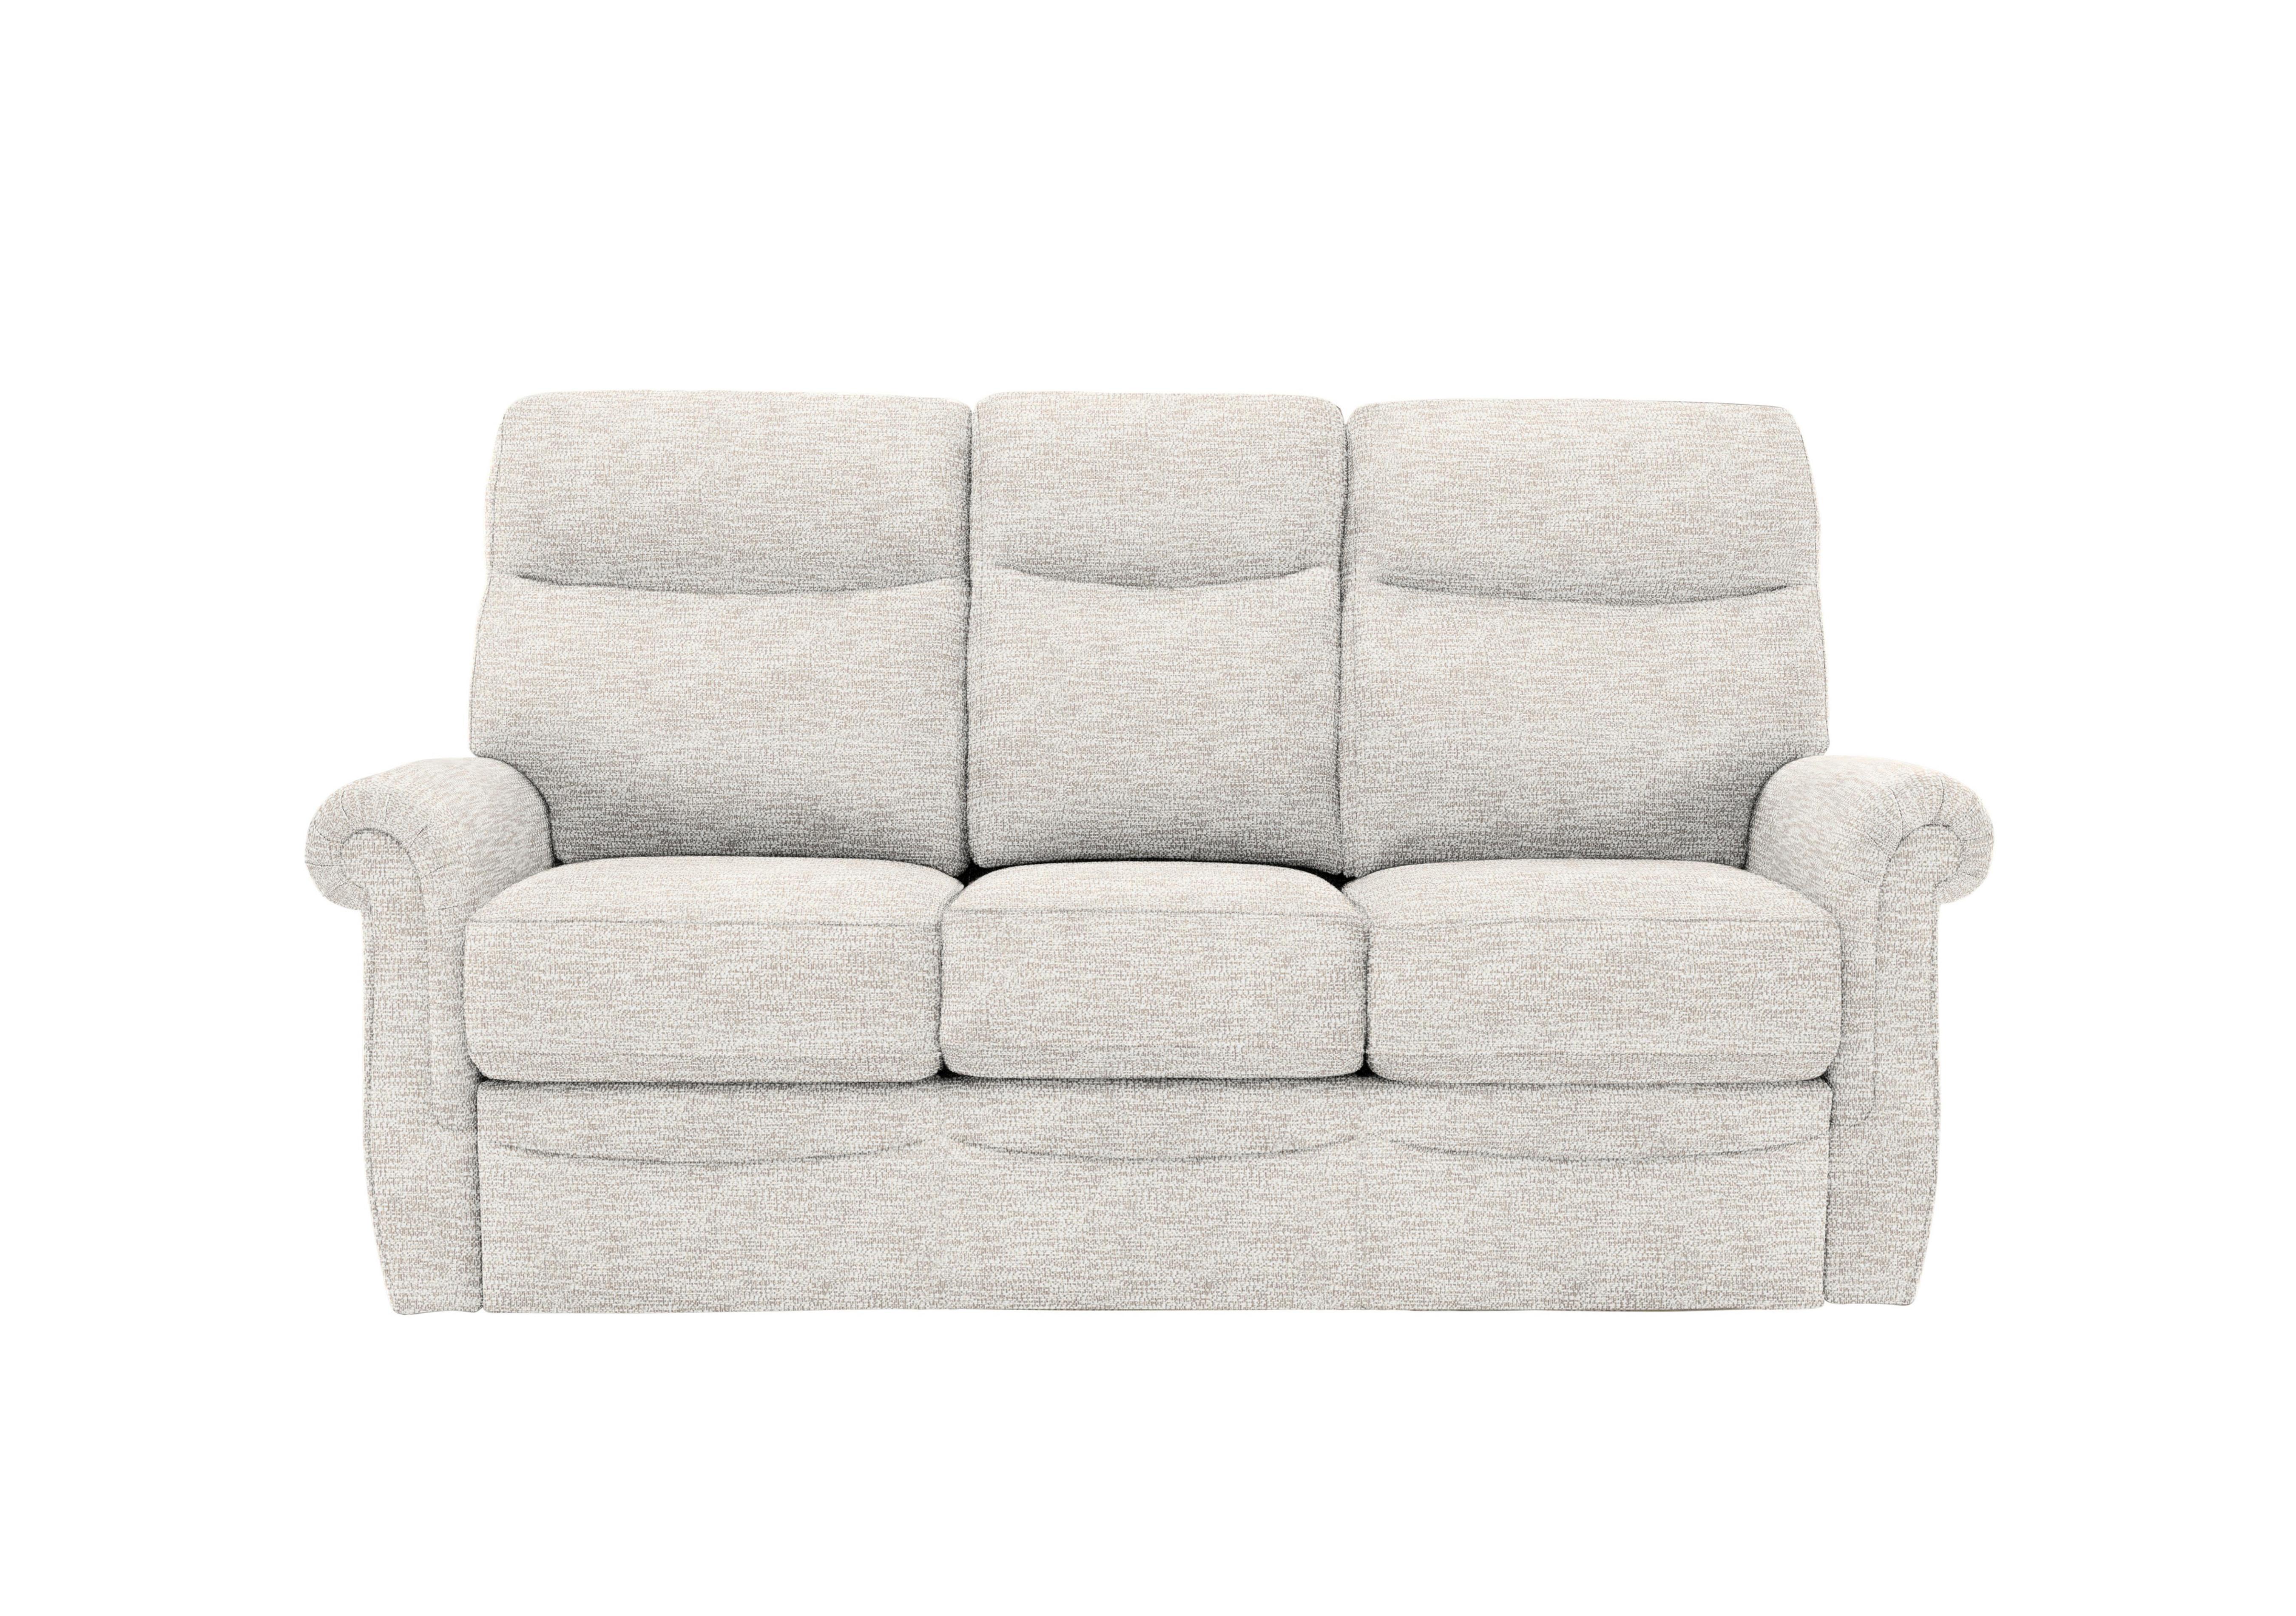 Avon Small 3 Seater Fabric Sofa in C931 Rush Cream on Furniture Village